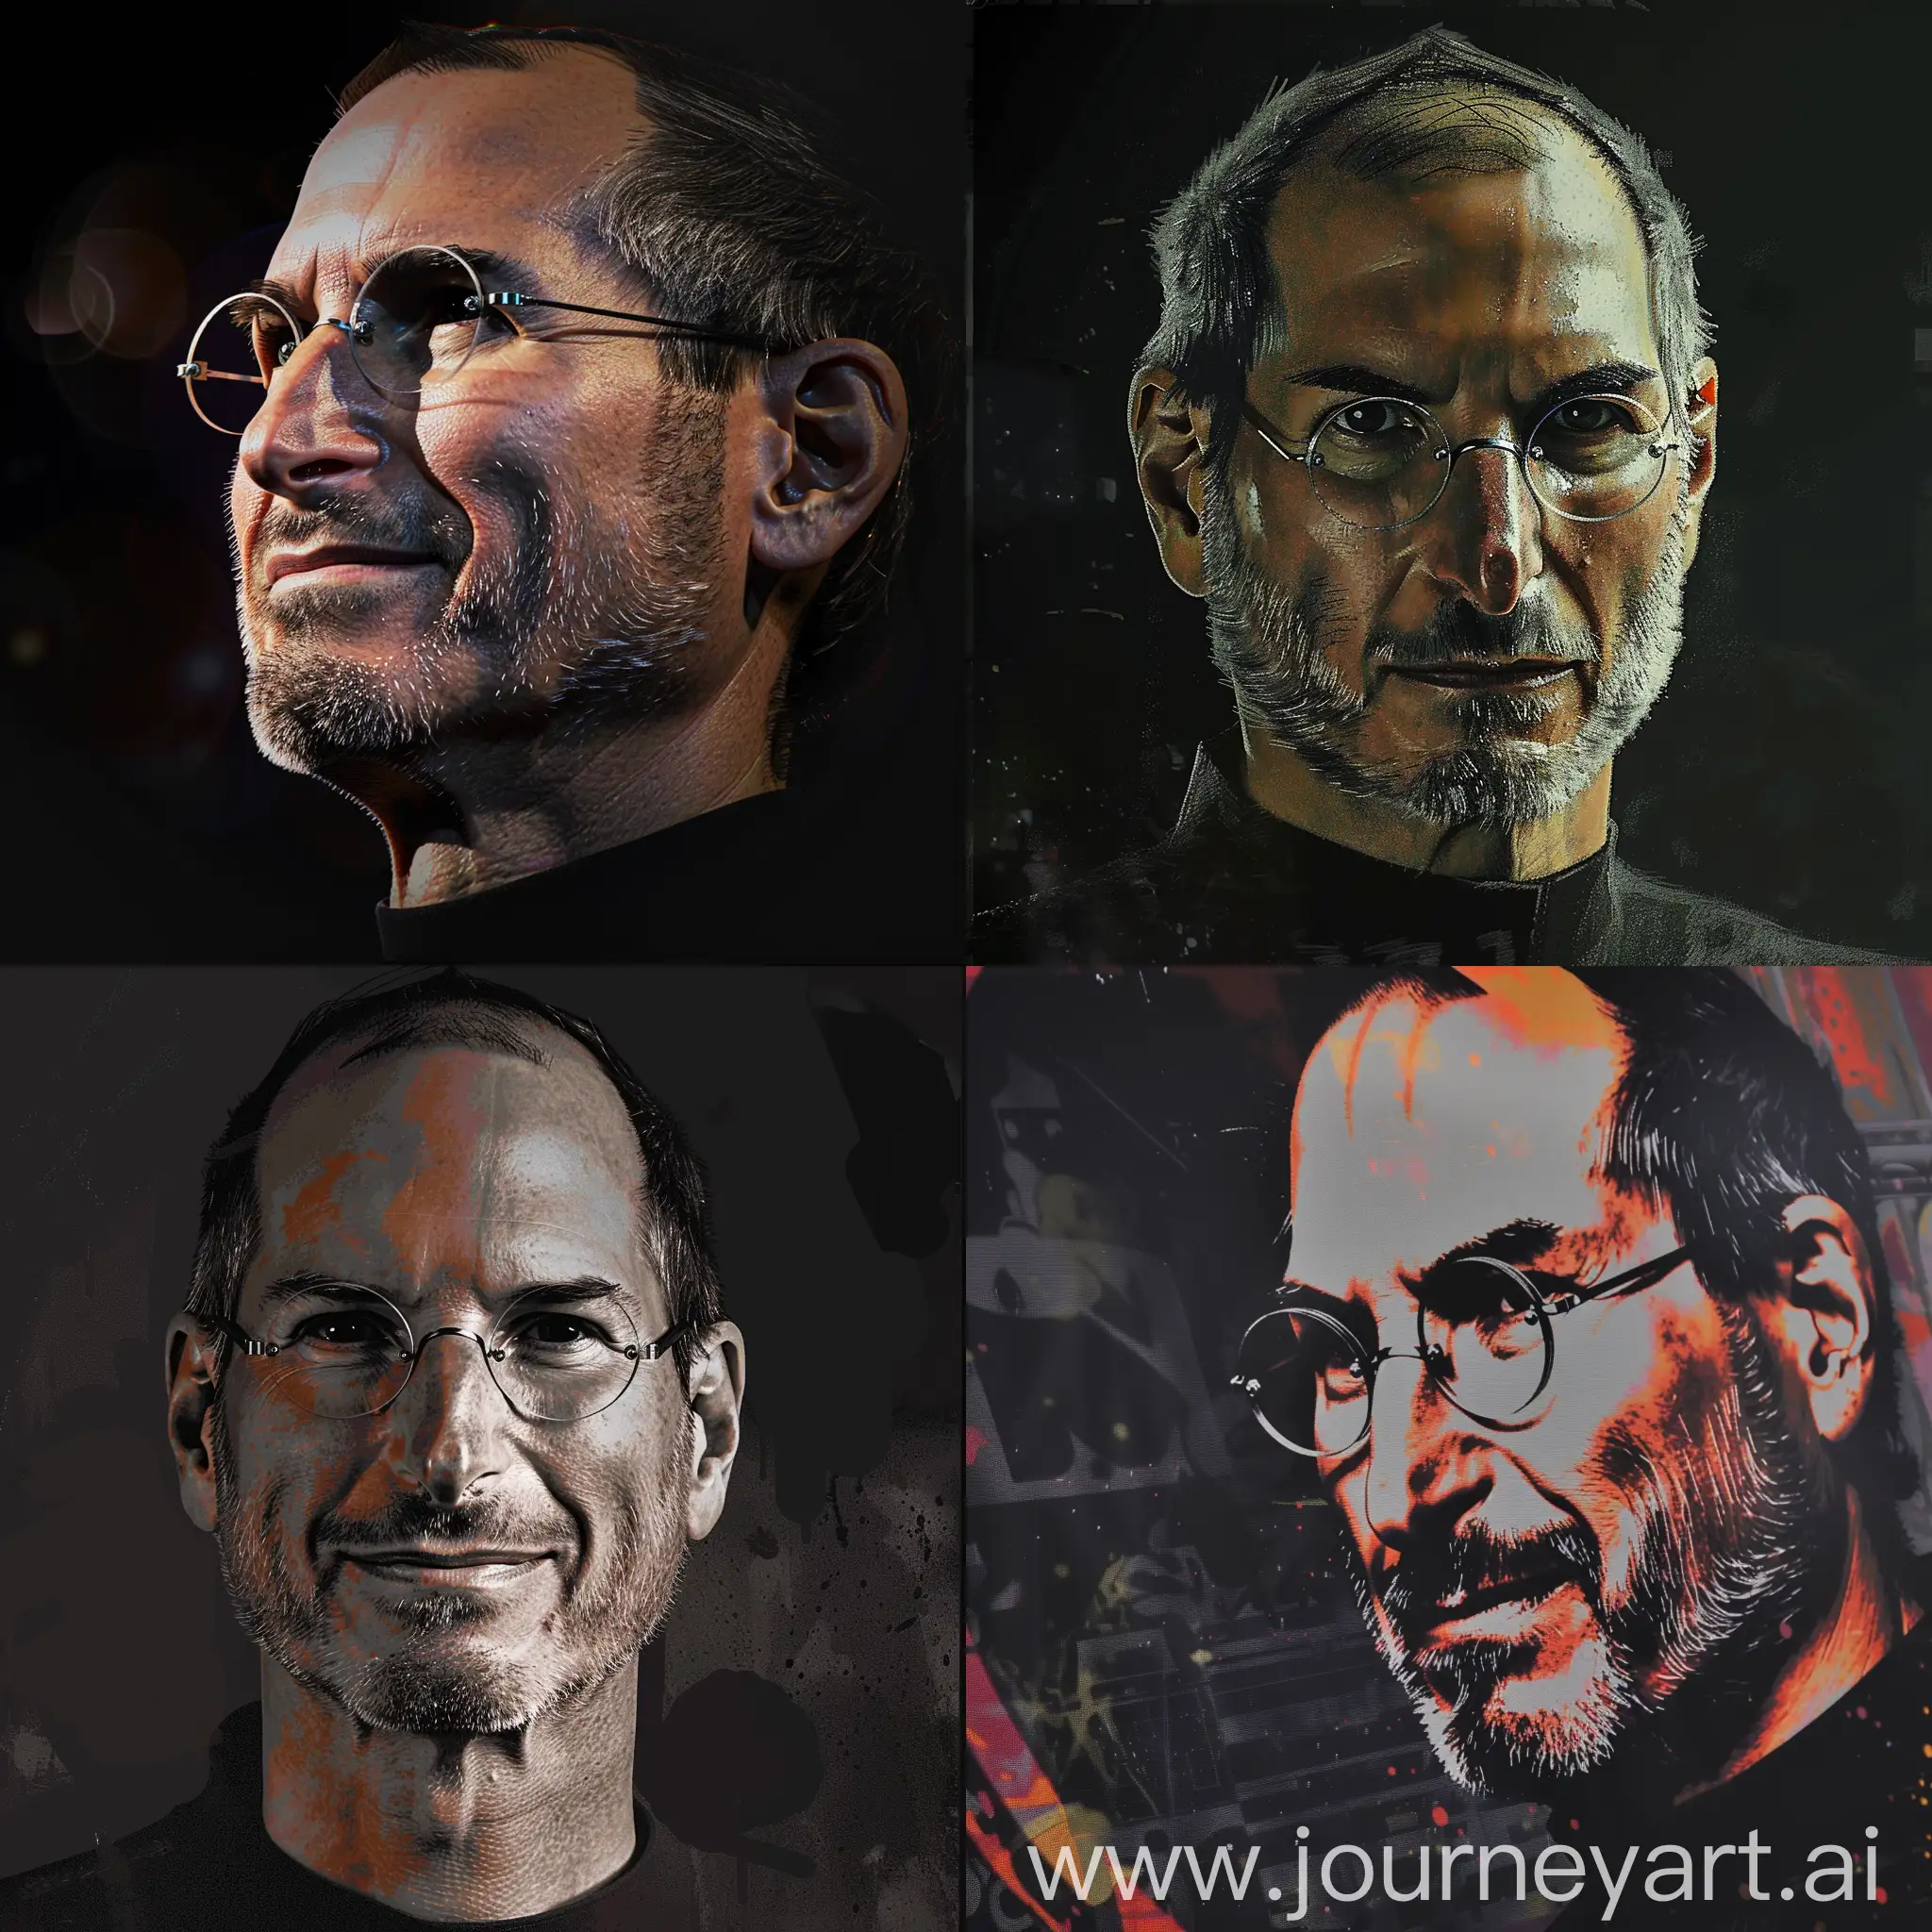 Steve-Jobs-Portrait-on-Black-Background